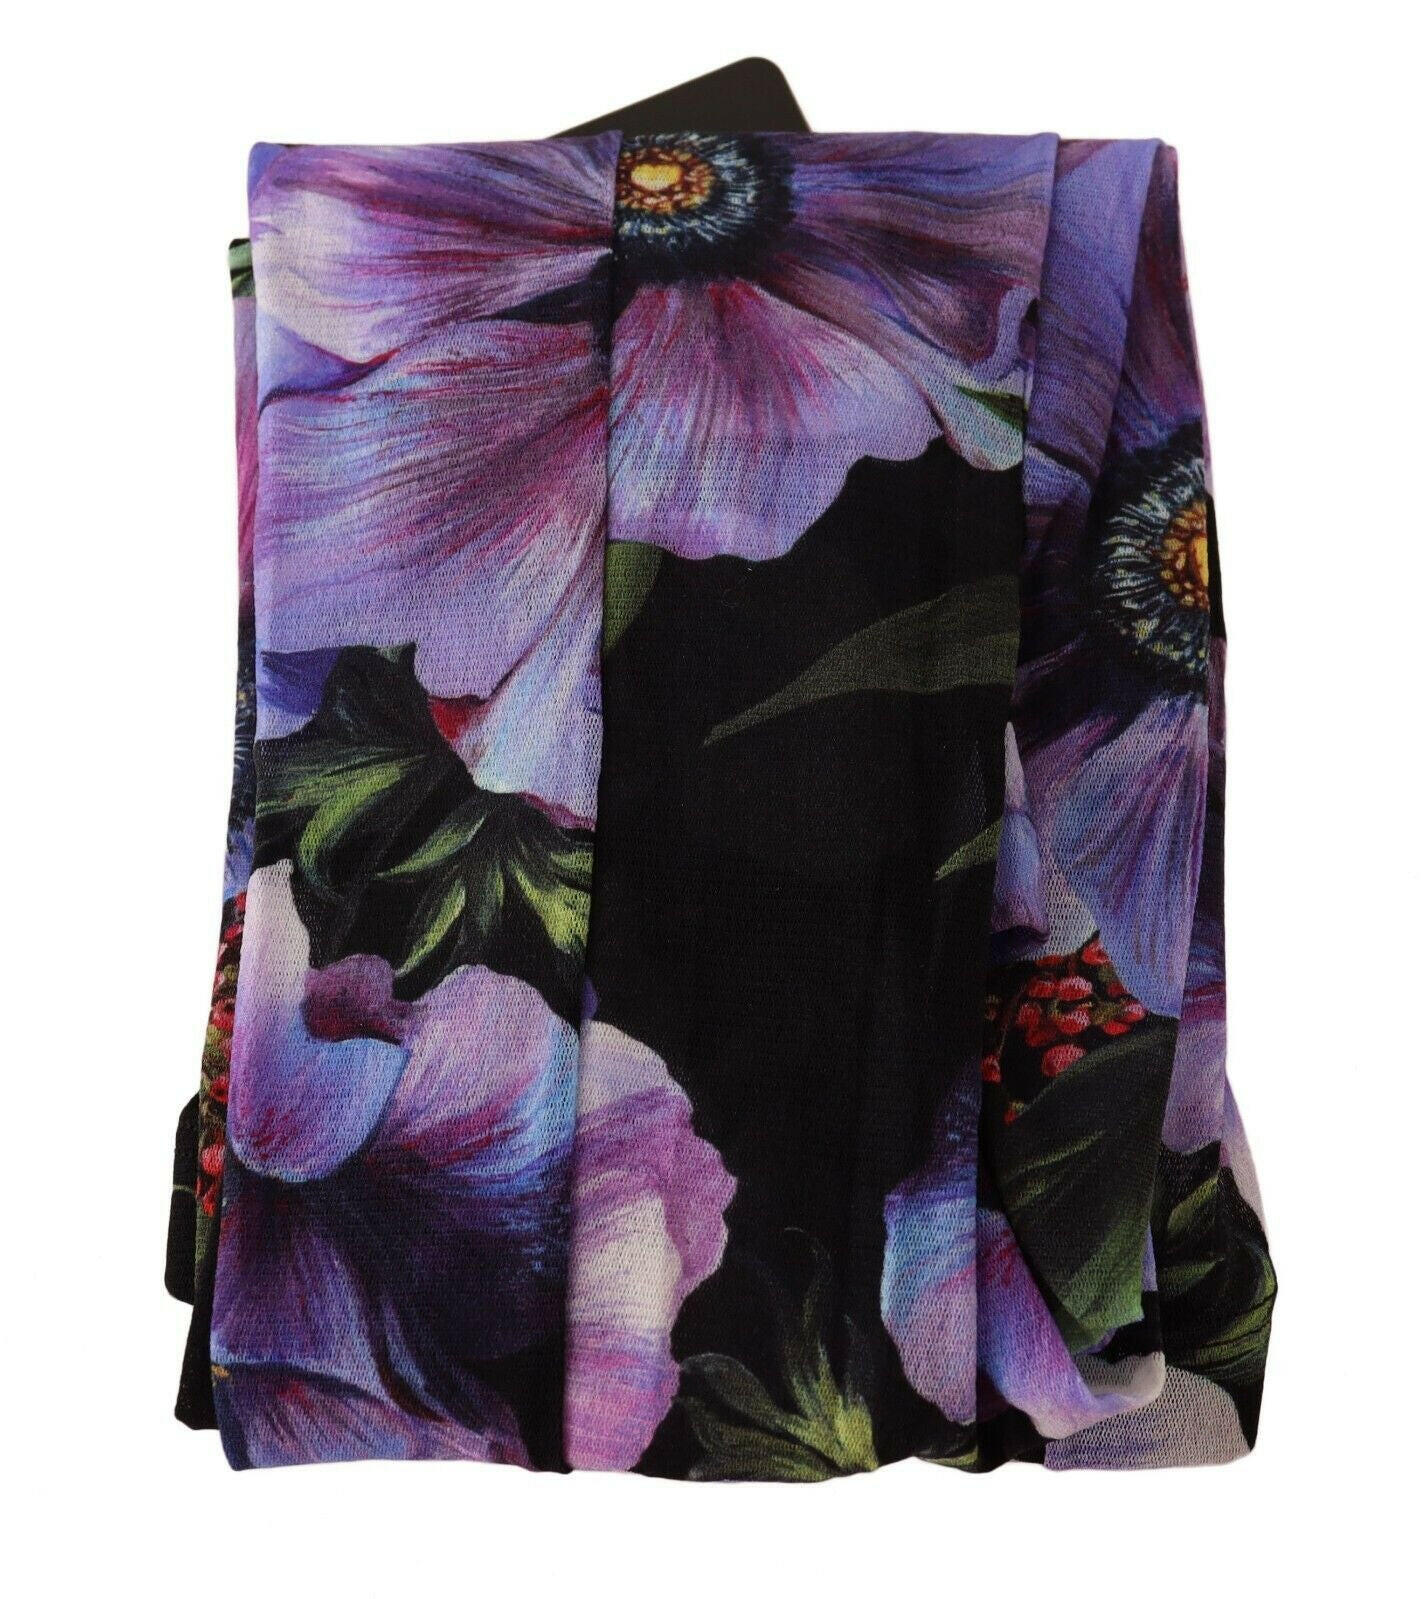 Dolce & Gabbana Black Floral Print Tights Nylon Stockings - GENUINE AUTHENTIC BRAND LLC  